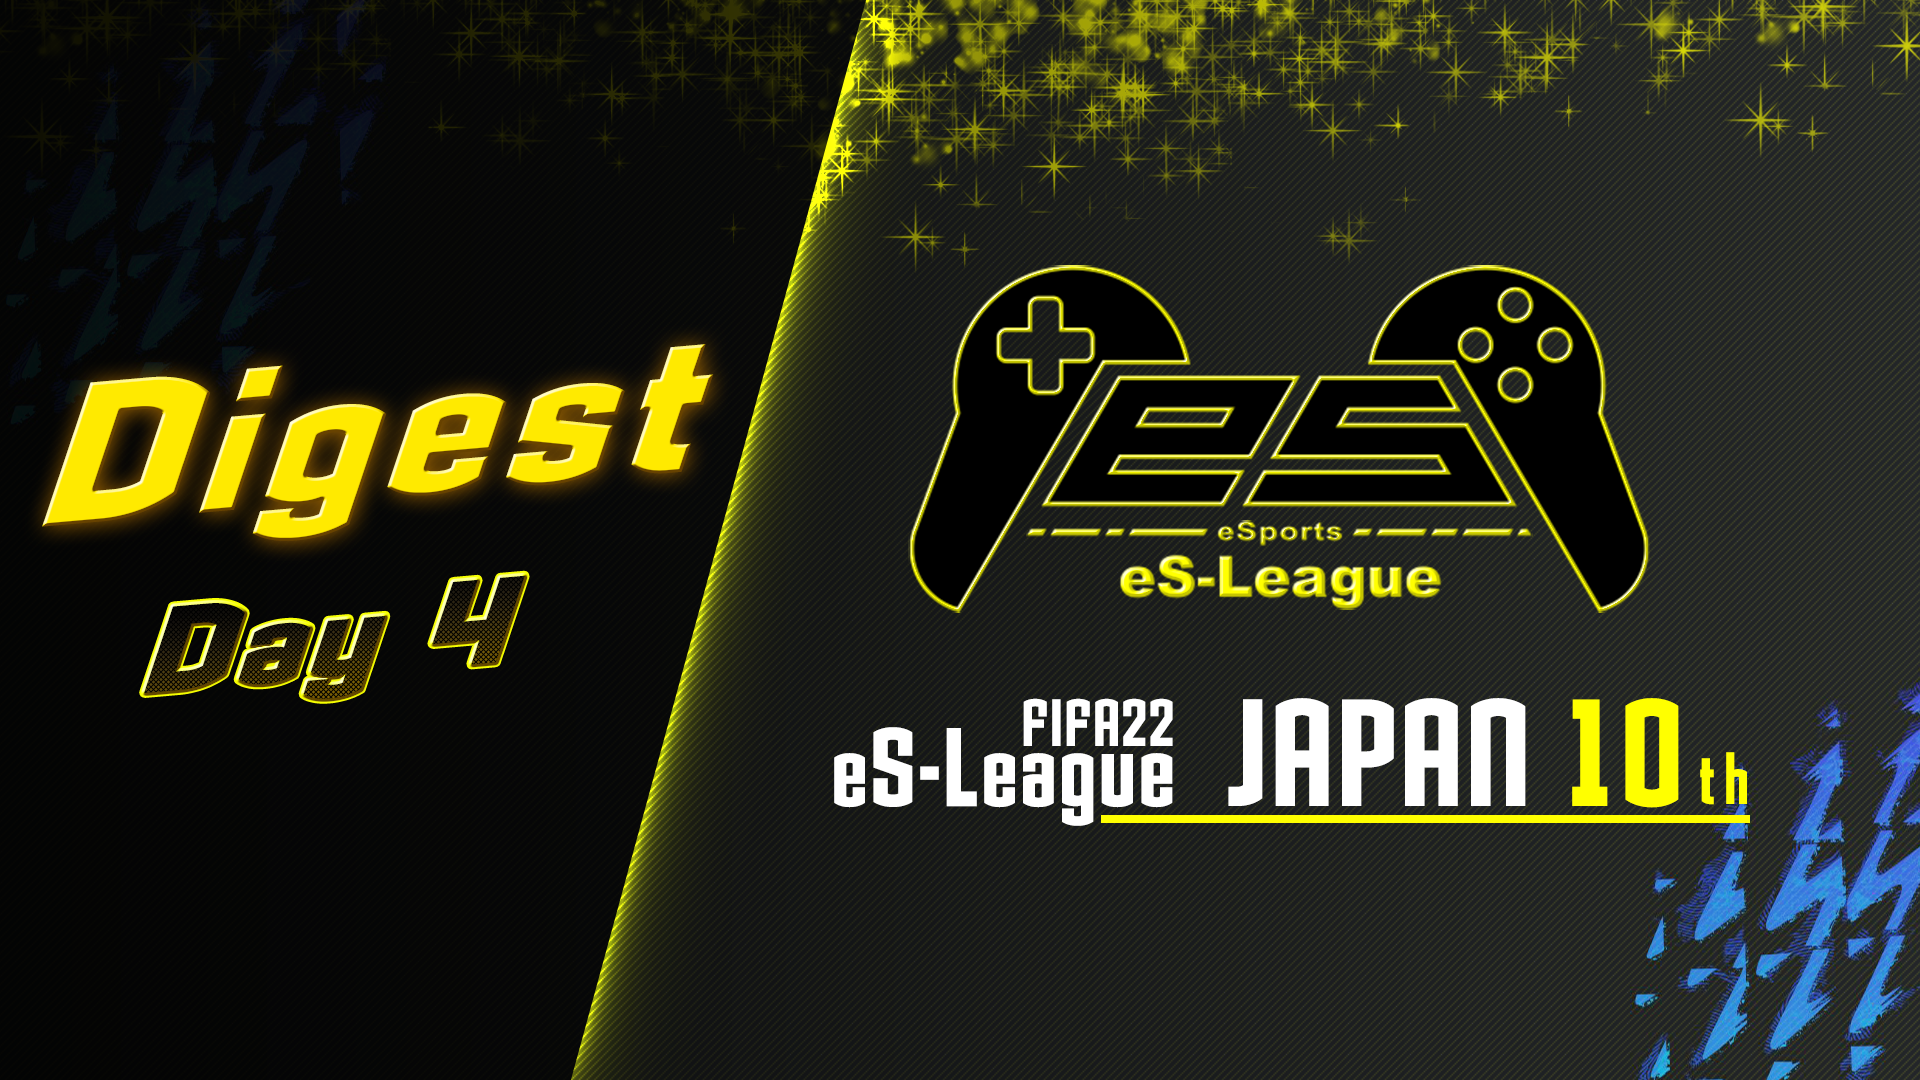 FIFA22 eS-League JAPAN 10th DAY4 ダイジェスト